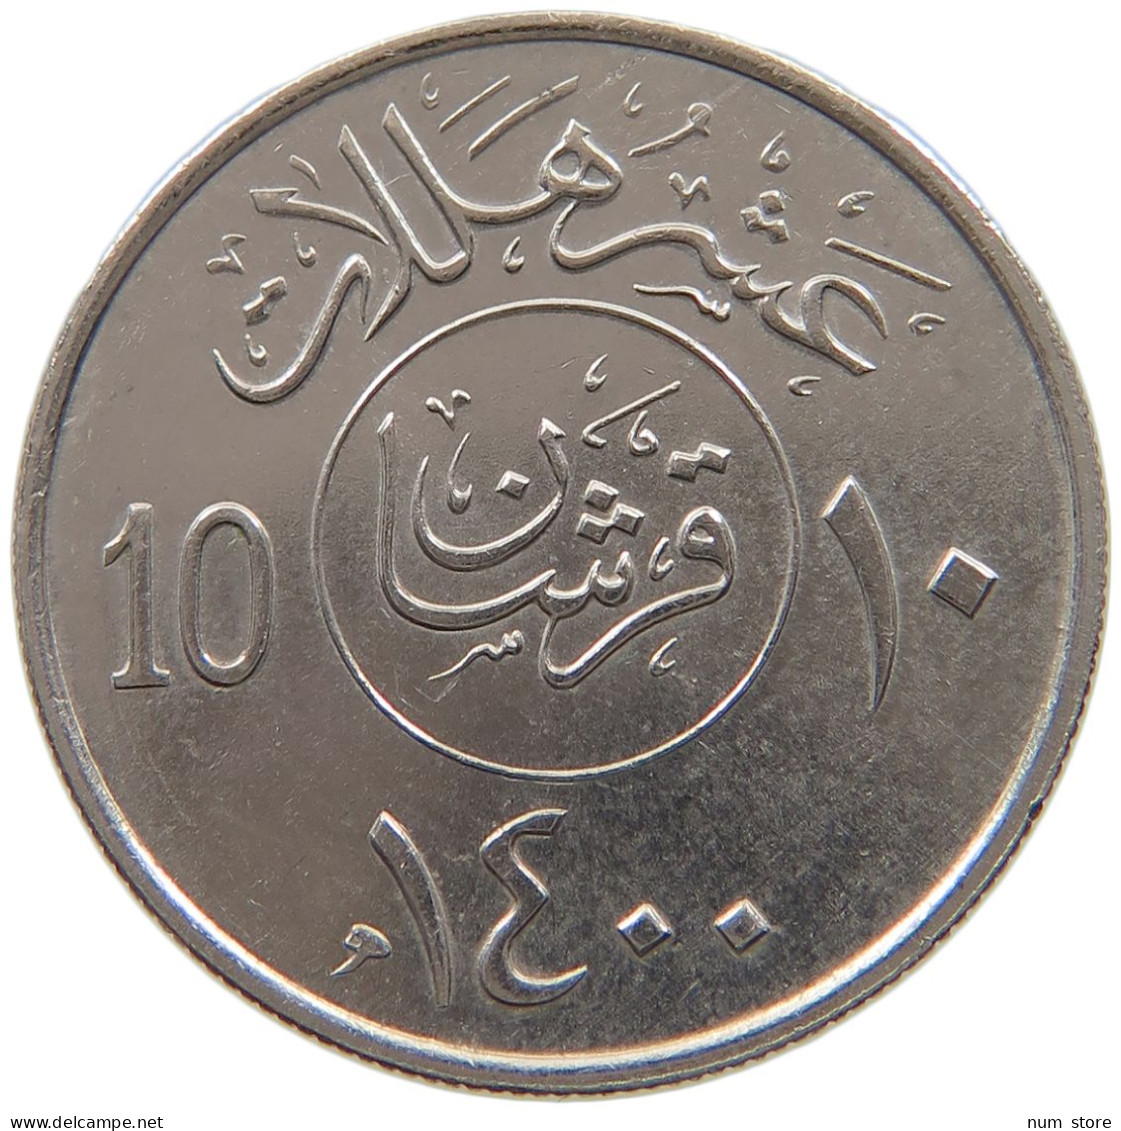 SAUDI ARABIA 10 HALALA 1400  #a050 0117 - Arabie Saoudite